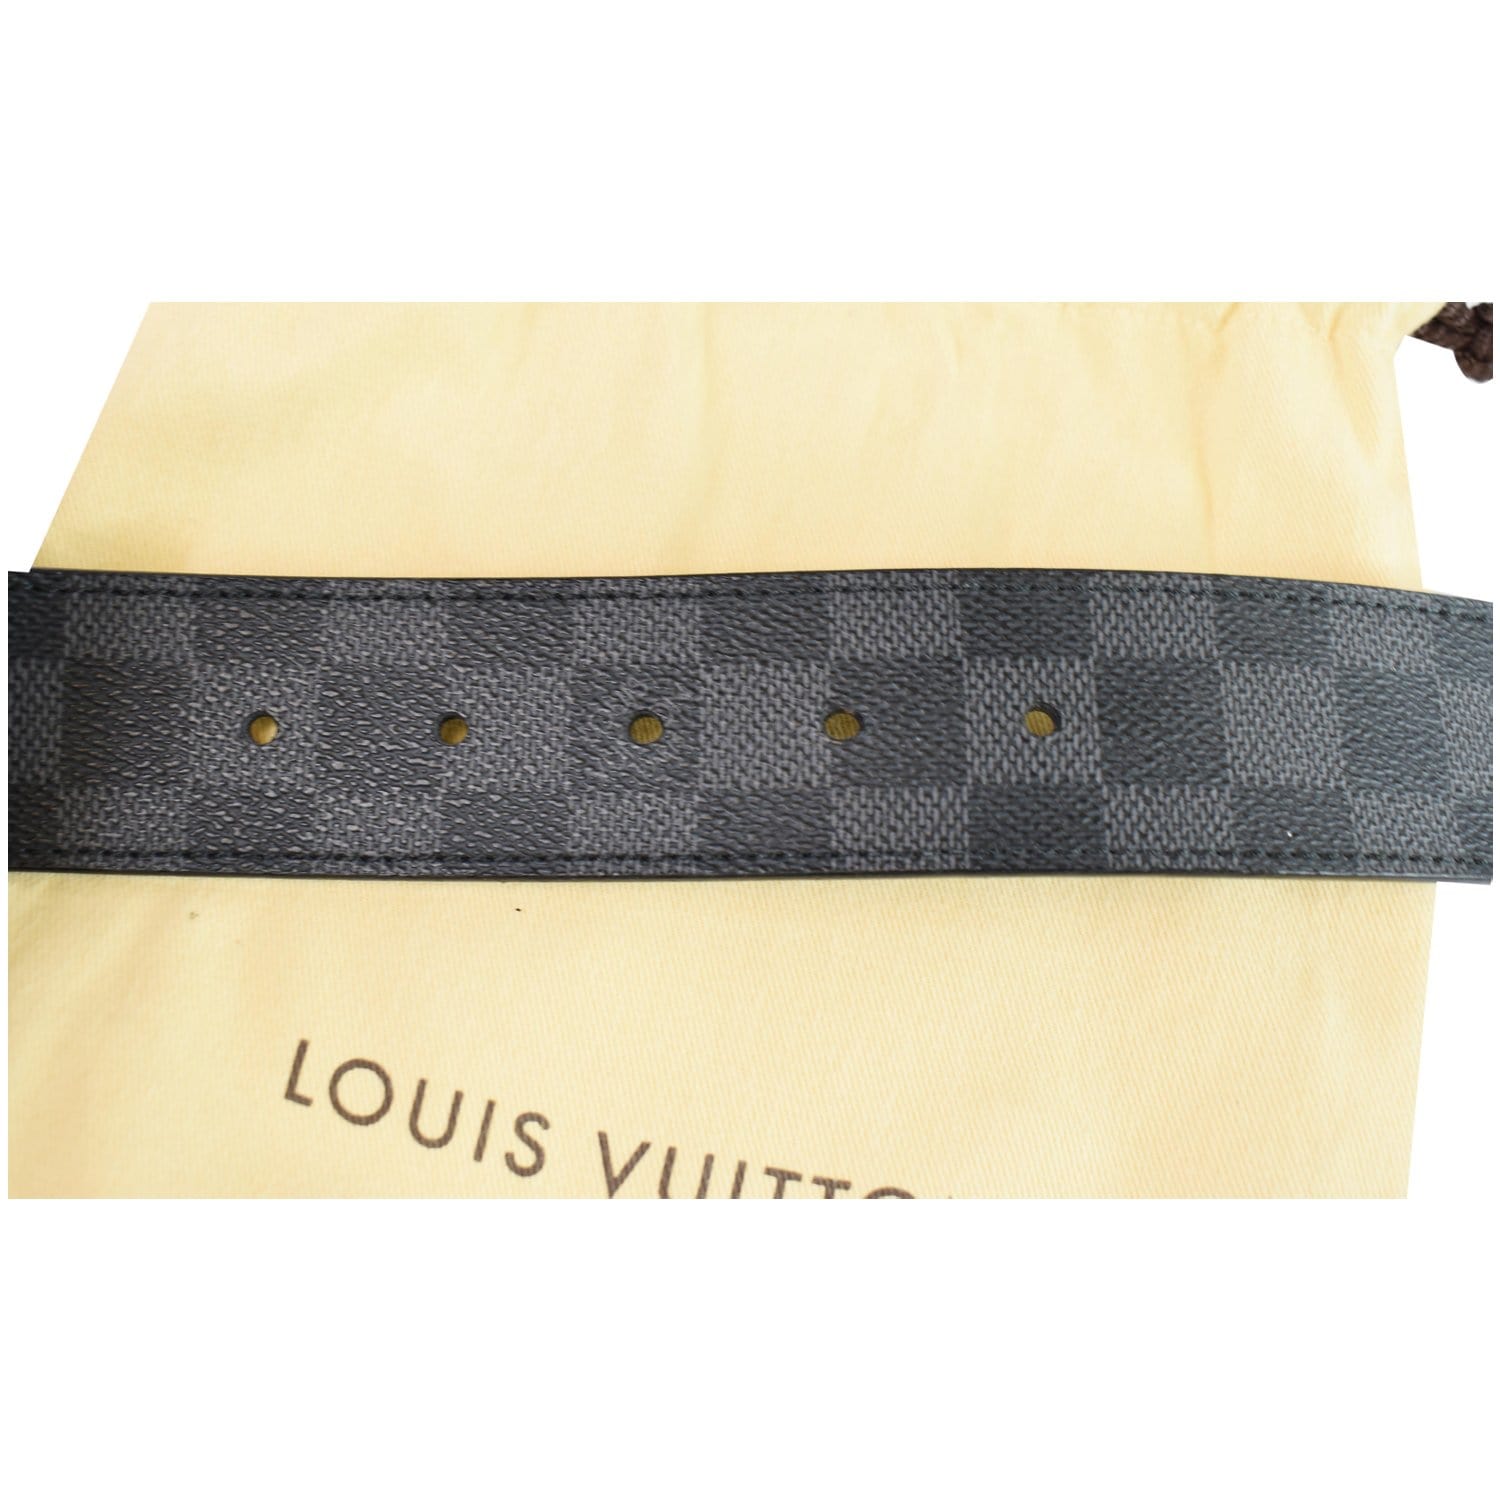 LOUIS VUITTON Initial Belt Damier Graphite Leather 110/44 M9808 WITH RECEIPT